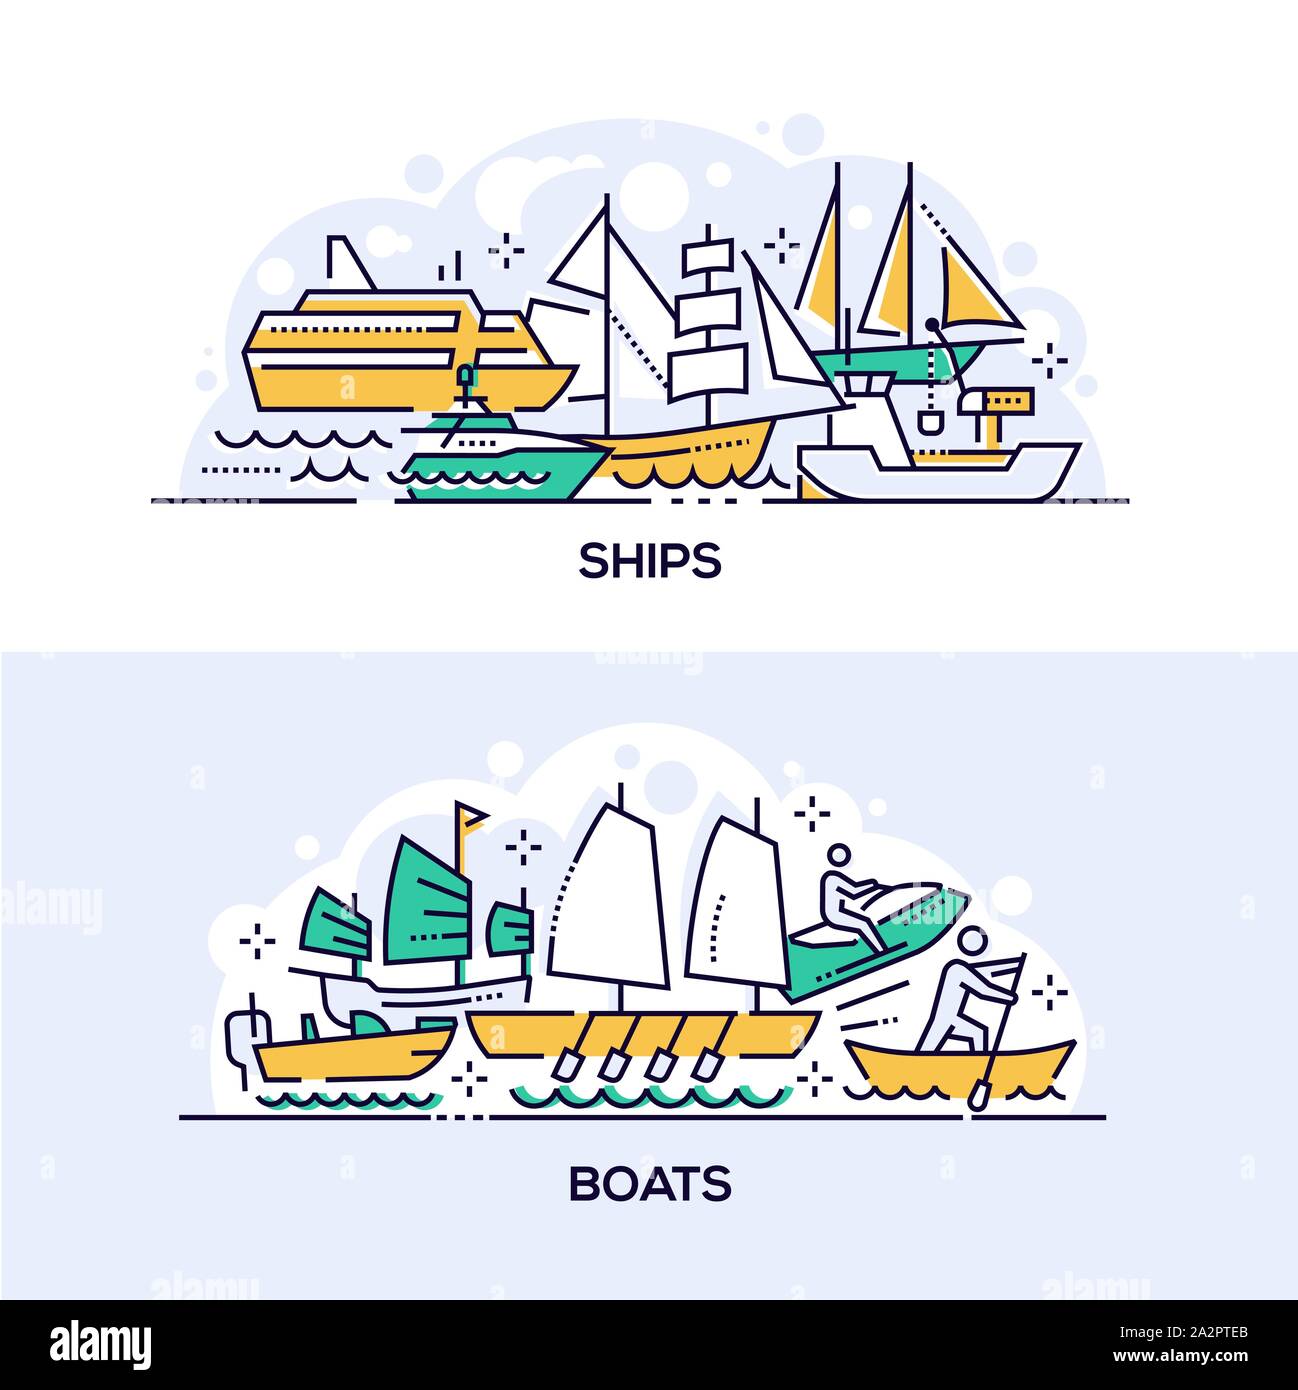 Ships and boats vector banner templates set Stock Vector